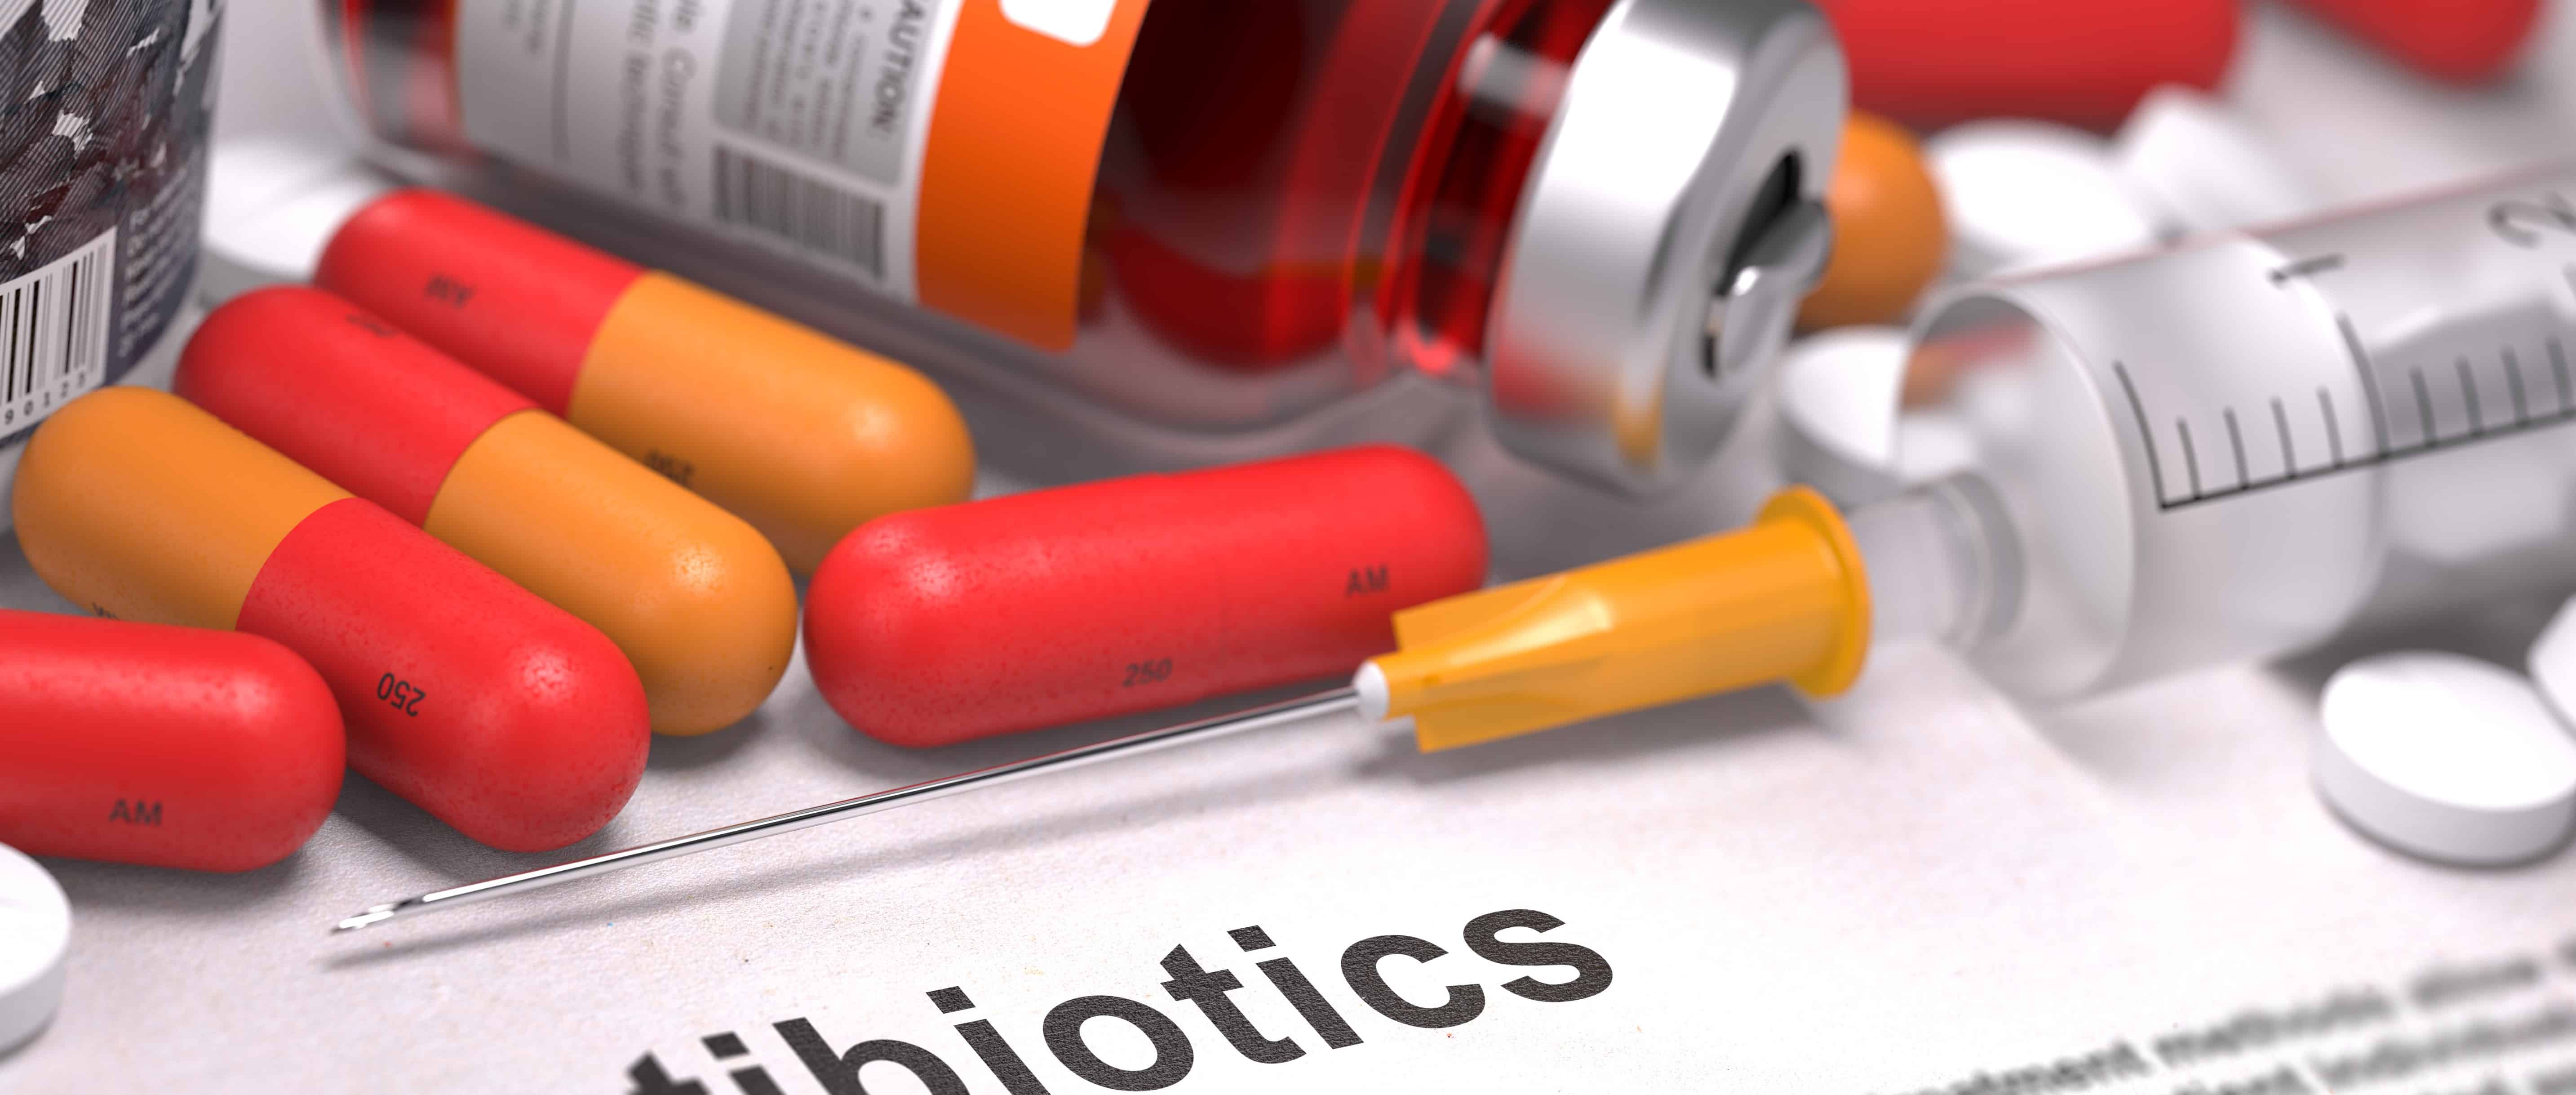 Rotenberg Antibiotics – Overprescribed And Under Effective E1453981017765 مجلة نقطة العلمية